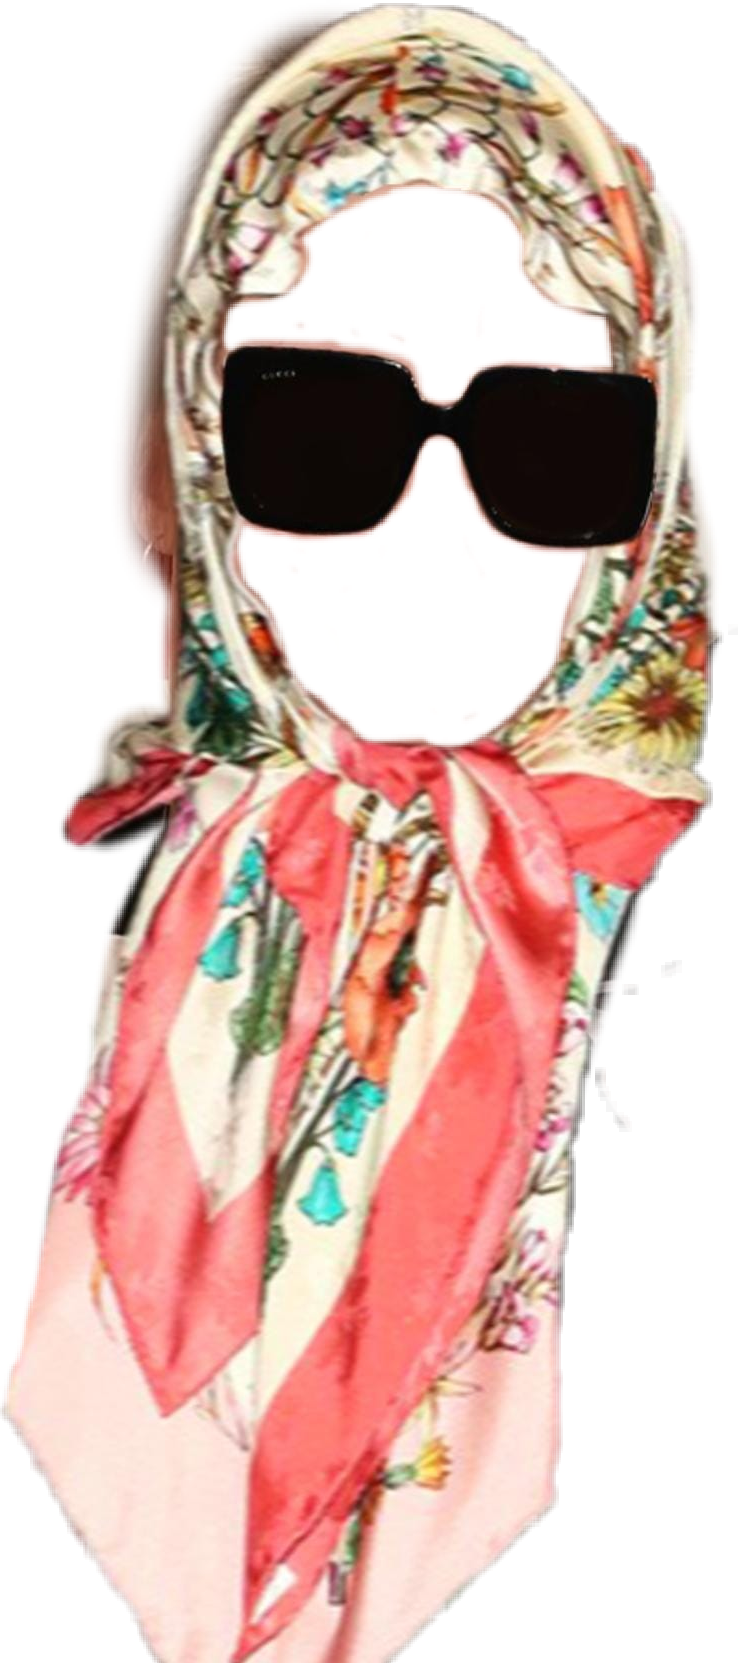 Michele Wittamer платок. Платок ruban. Платок на белом фоне. Женский платок и очки.